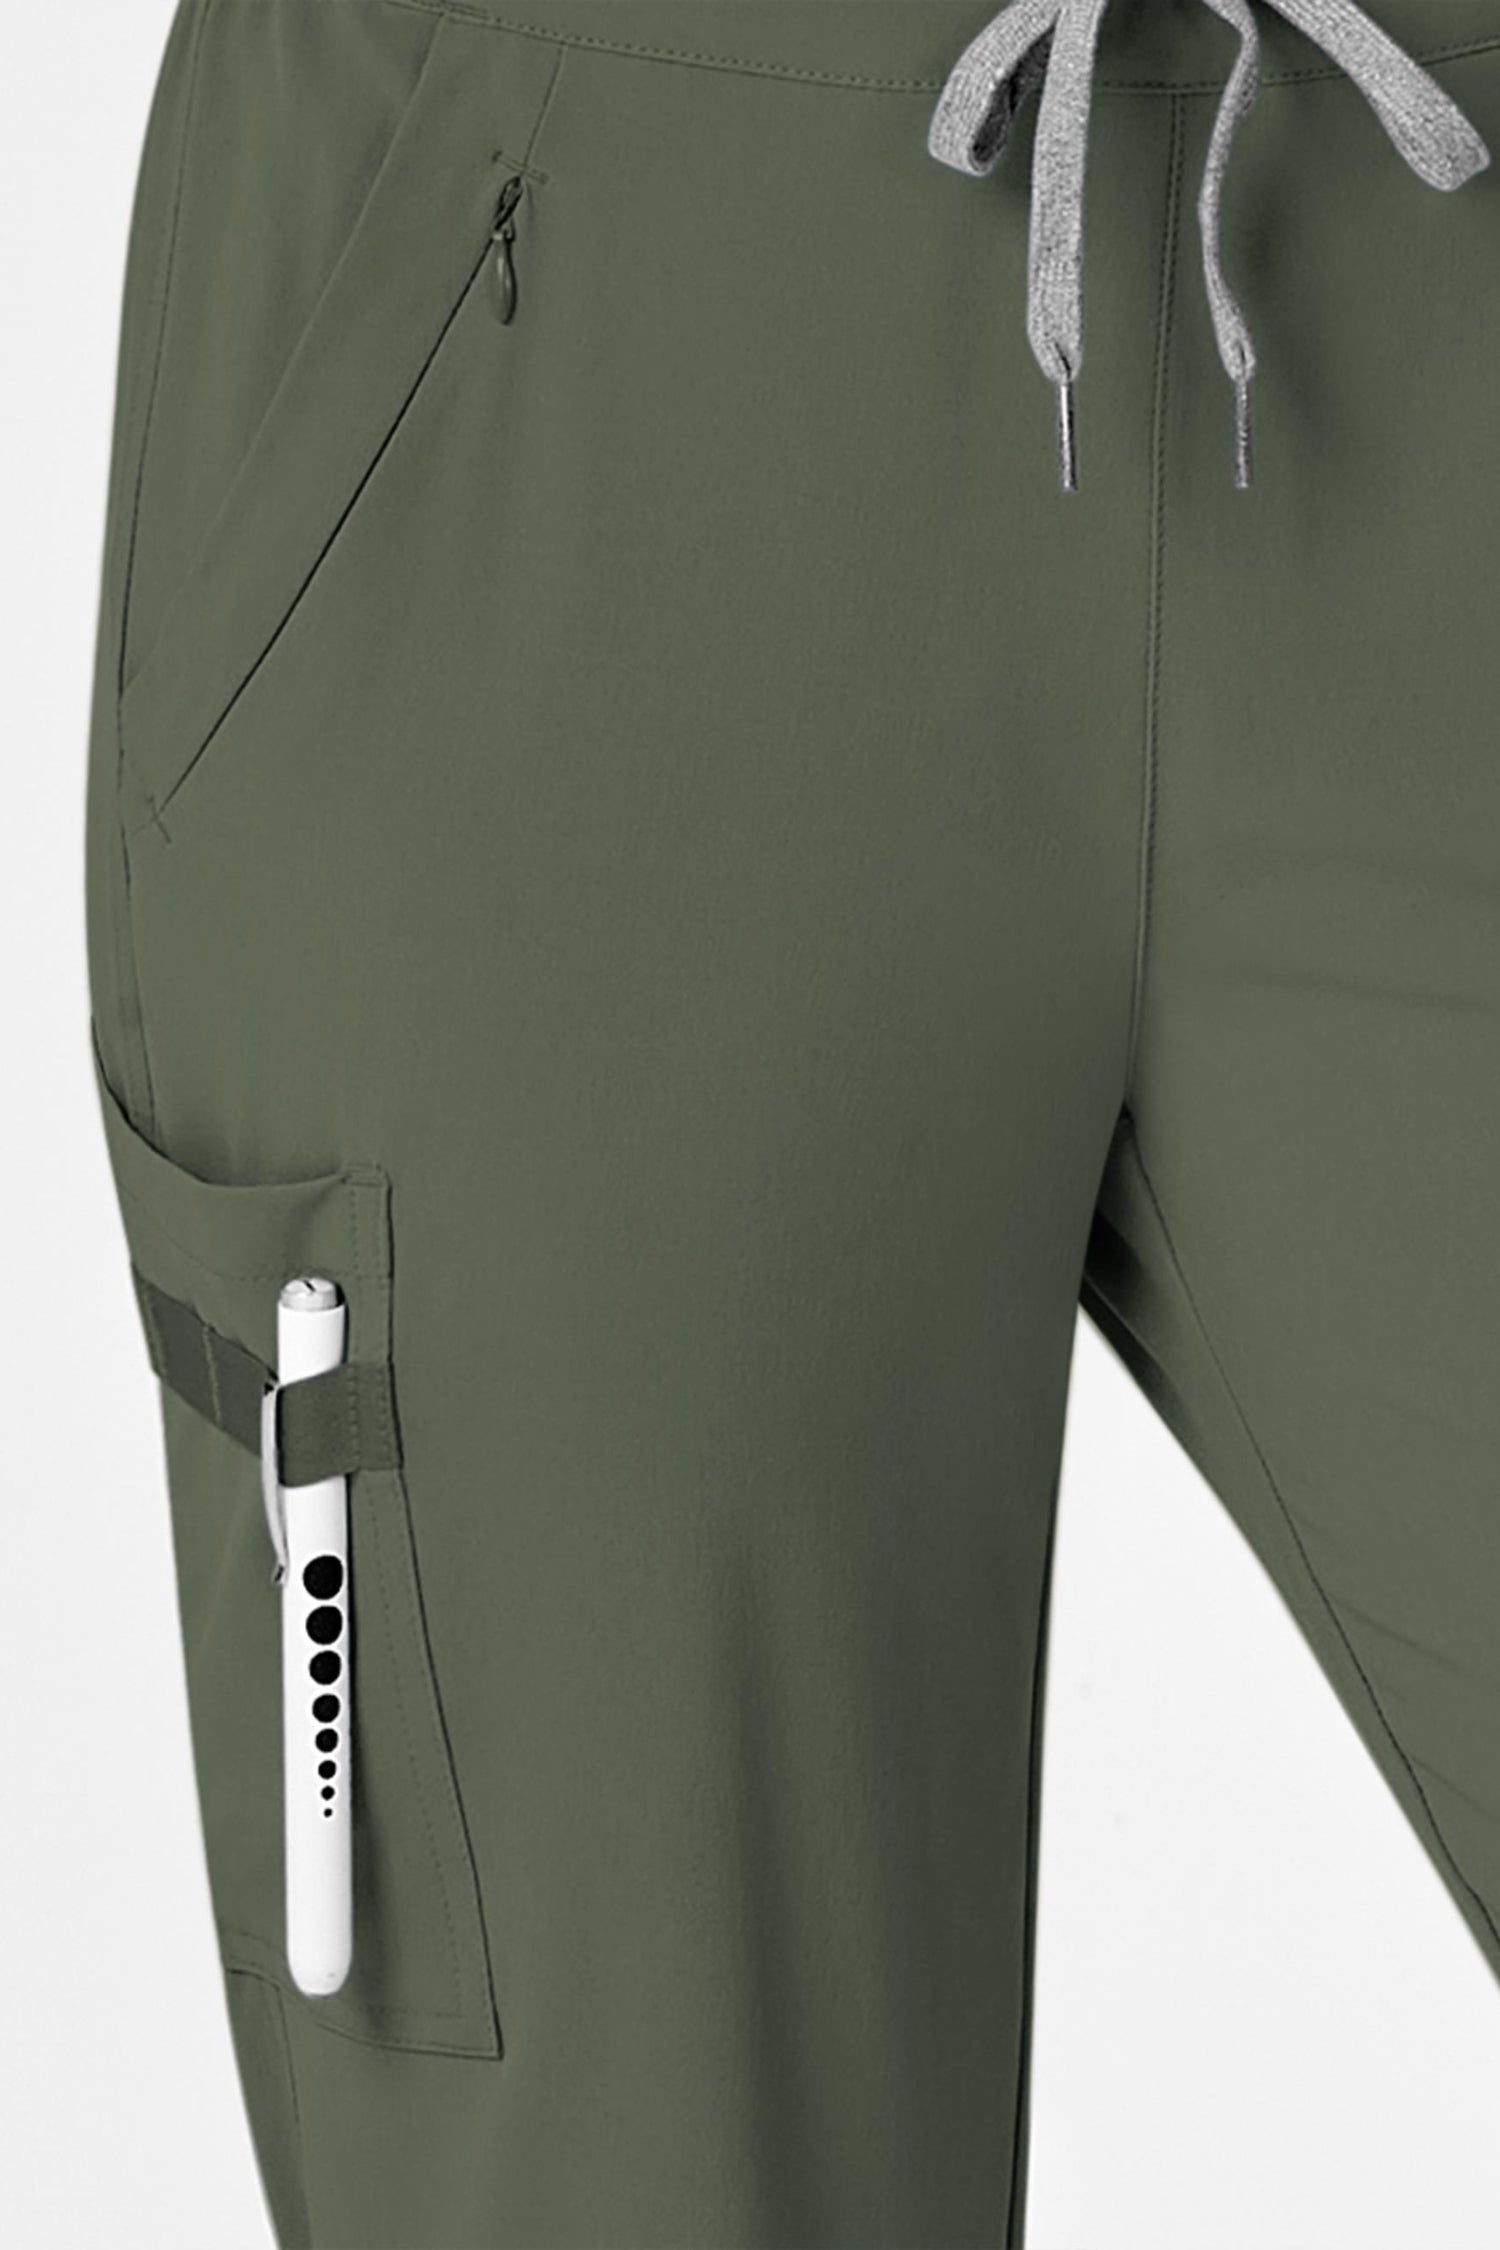 The North Face Women’s Stretch Cargo Shorts en polyester spandex, tenue médicale avec poches à fermeture